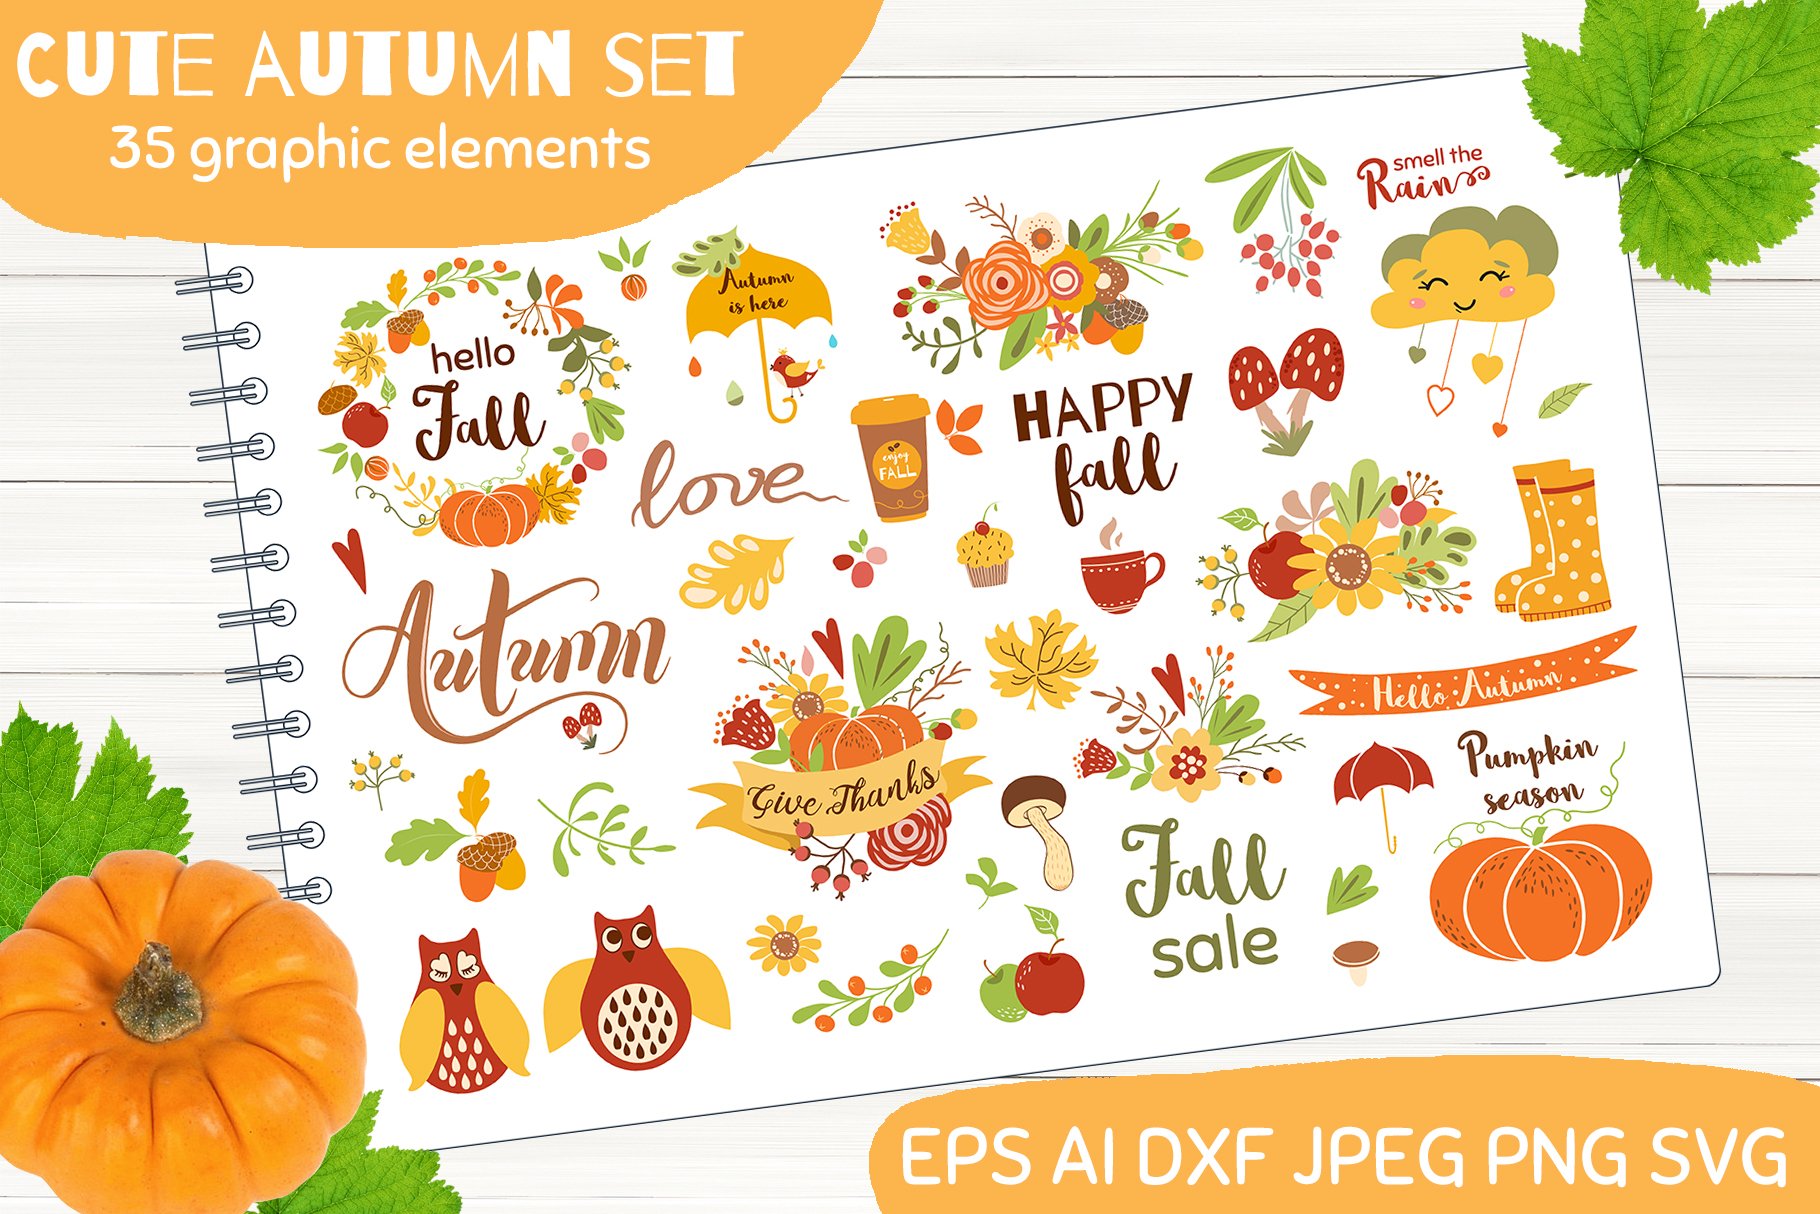 Cute fall clipart. Autumn logo set cover image.